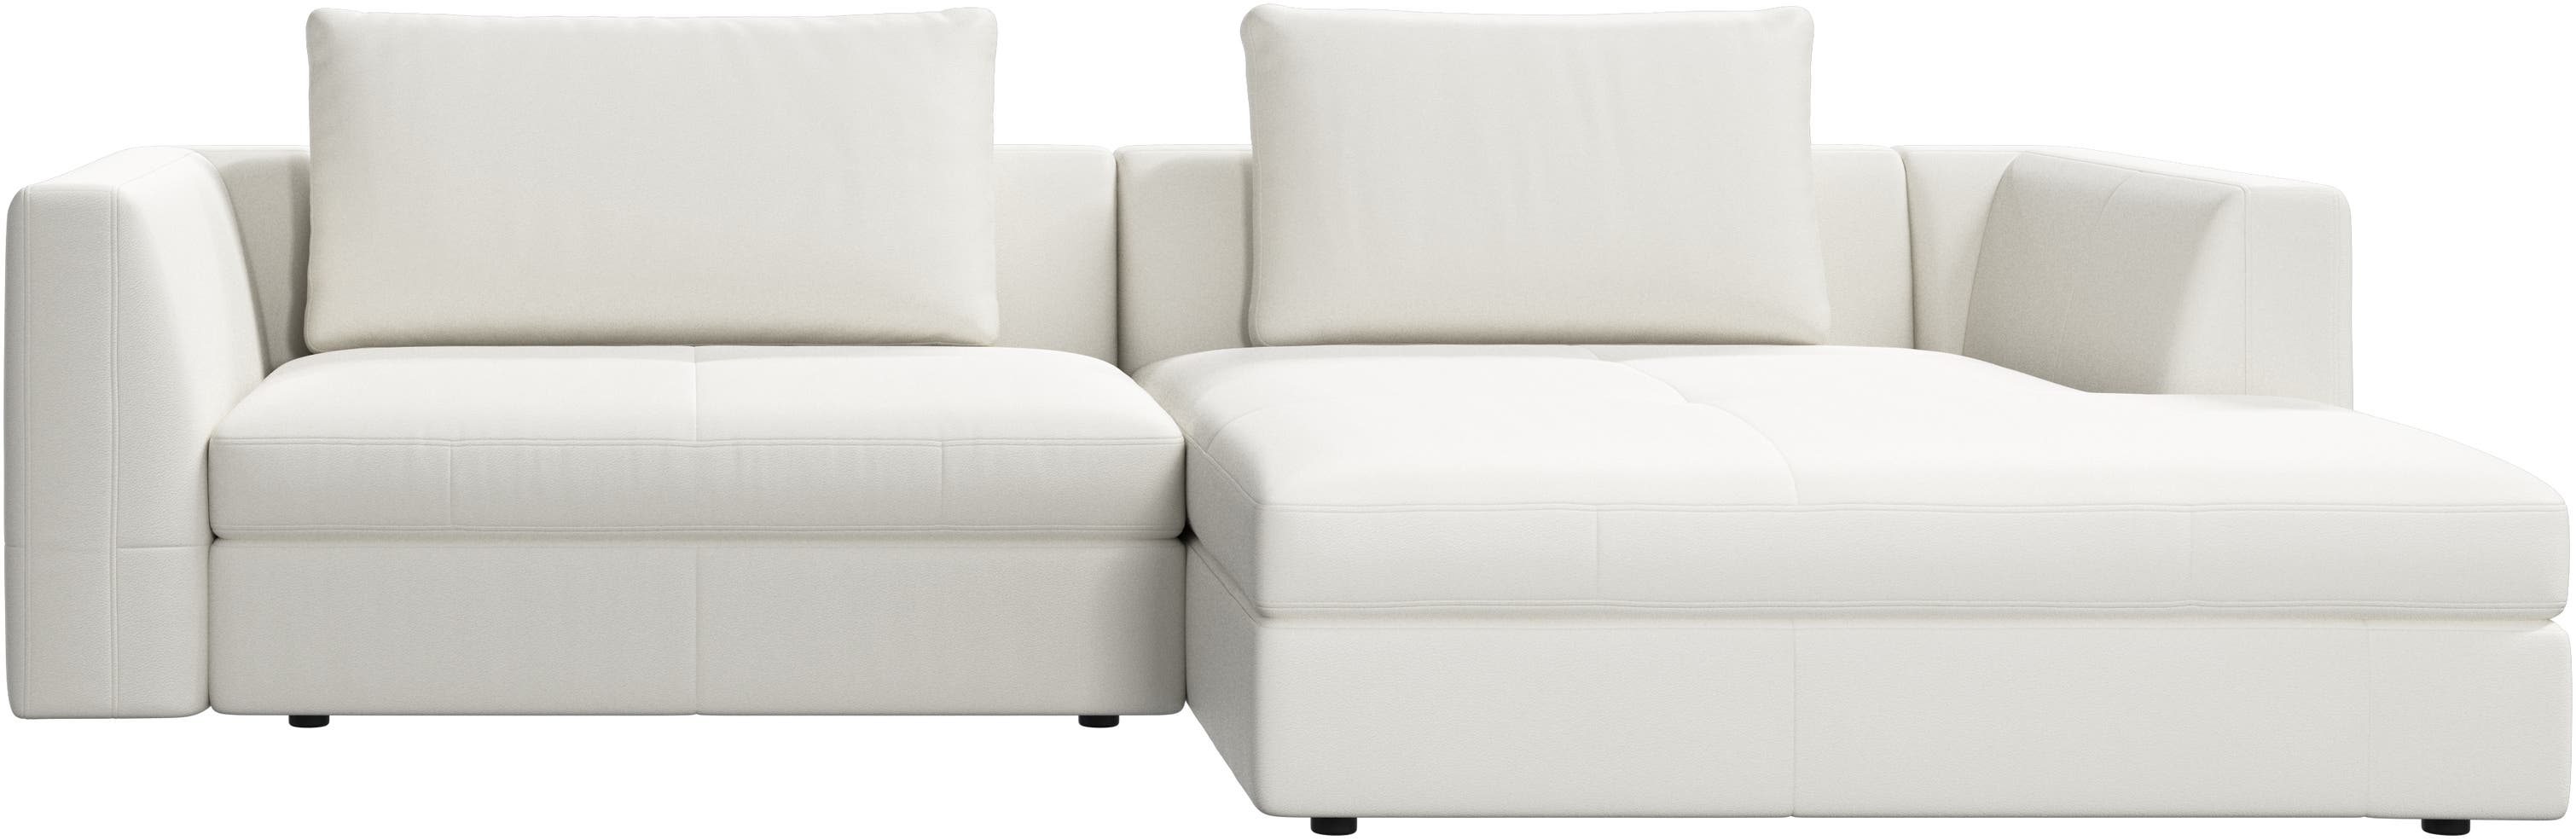 Bergamo chaise longue sofa